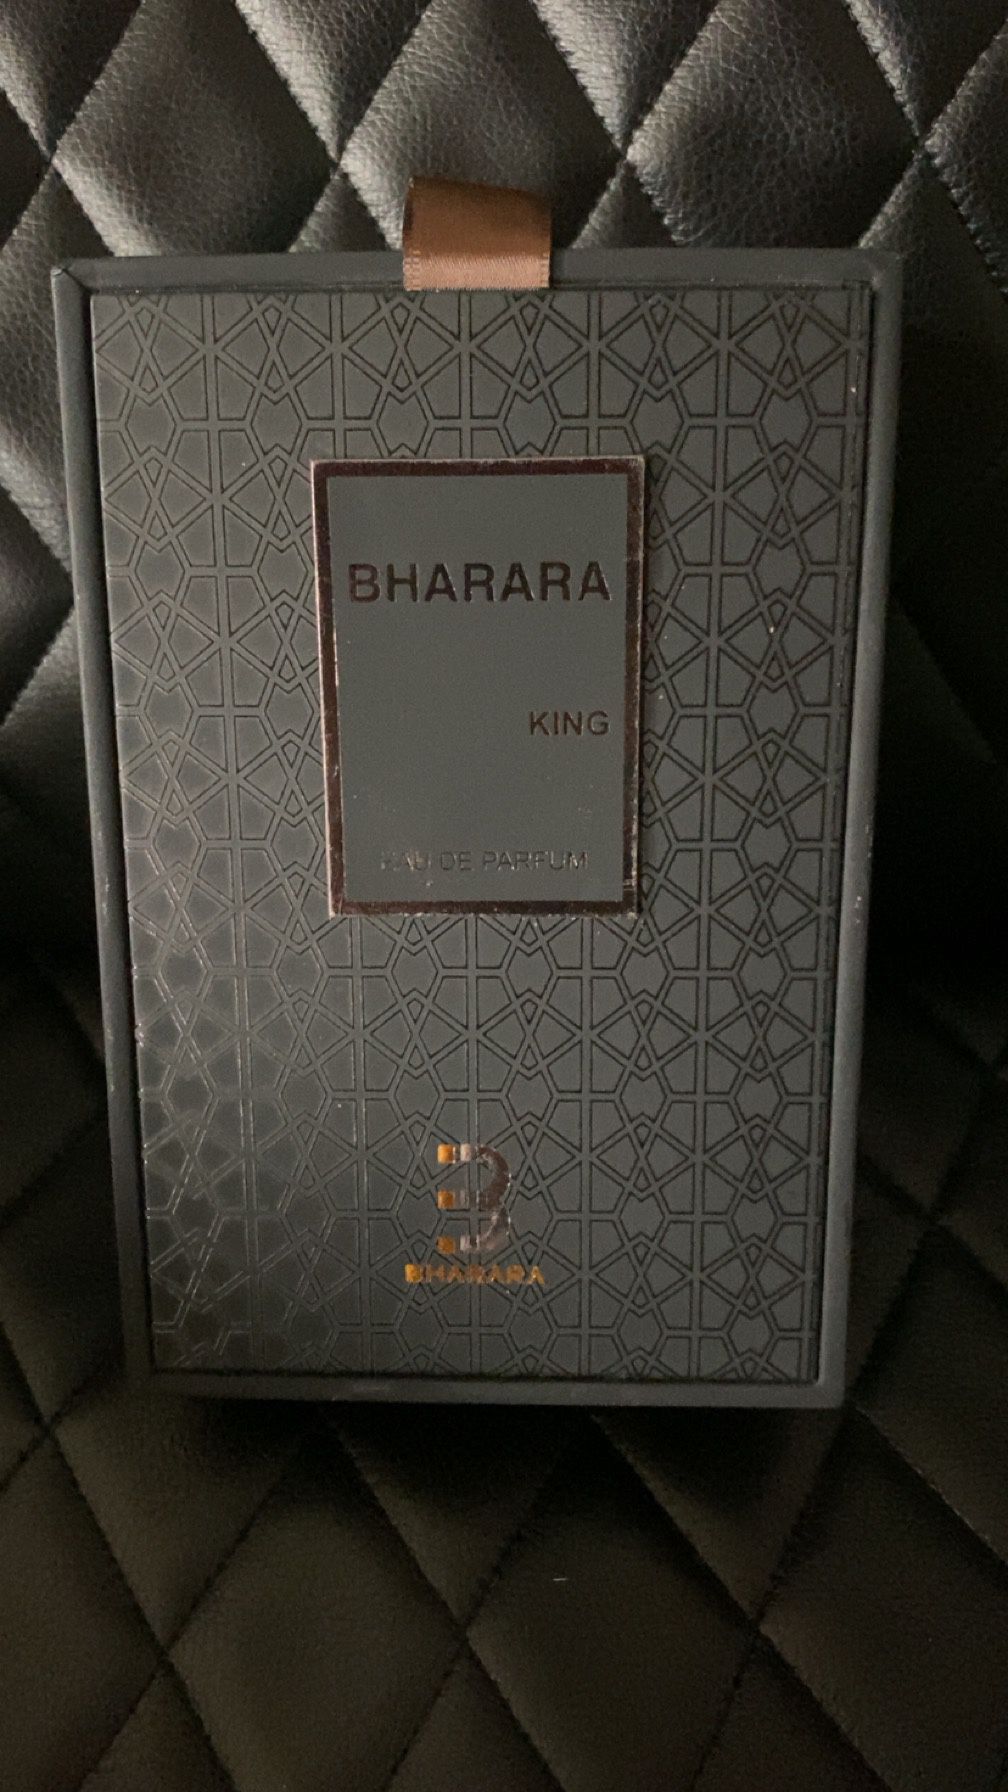 bahara eau de parfum 100ml